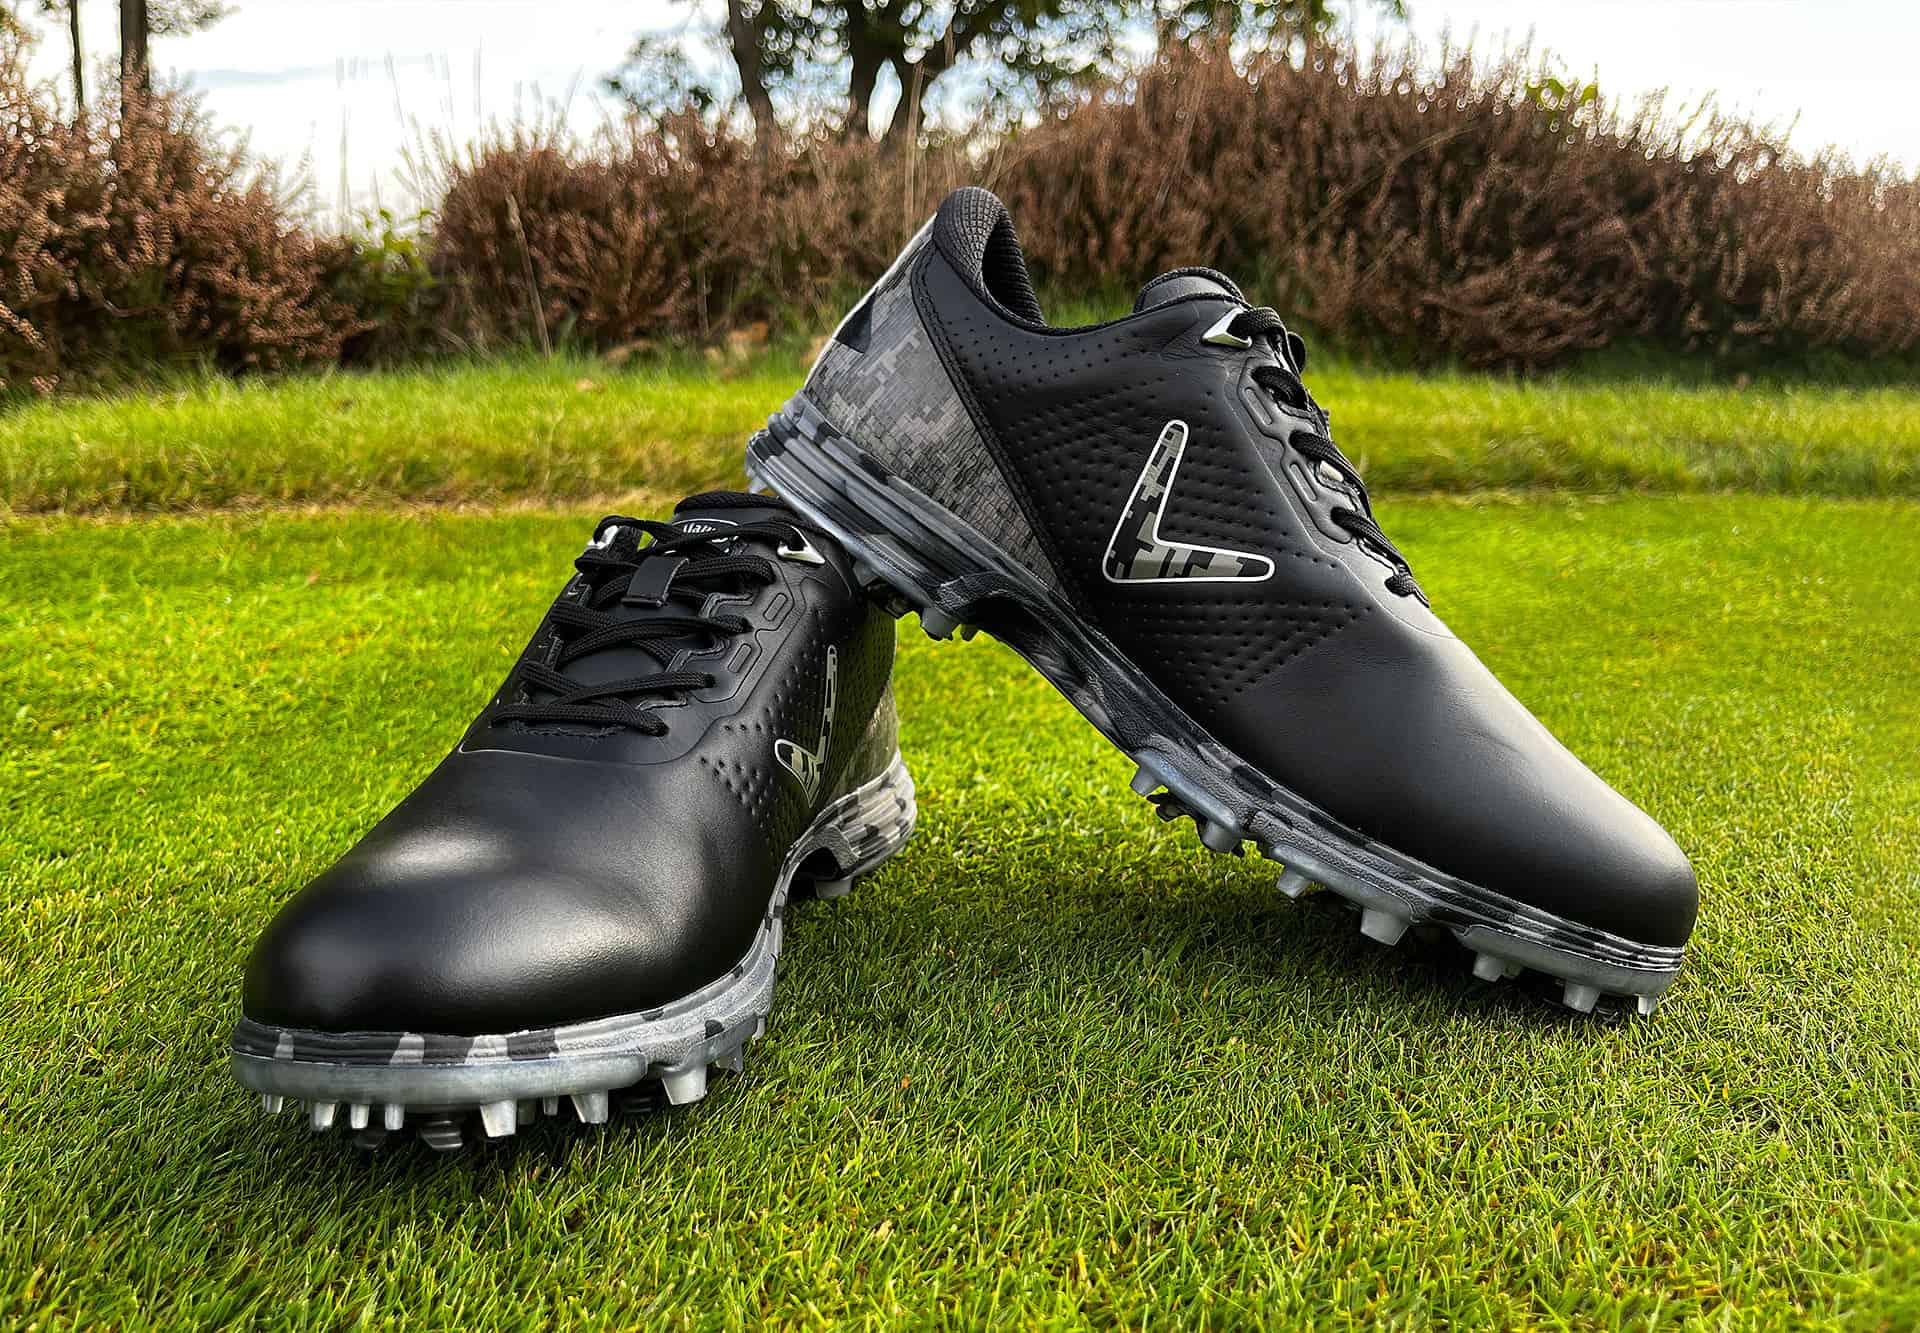 Callaway Apex Coronado S golf shoes review